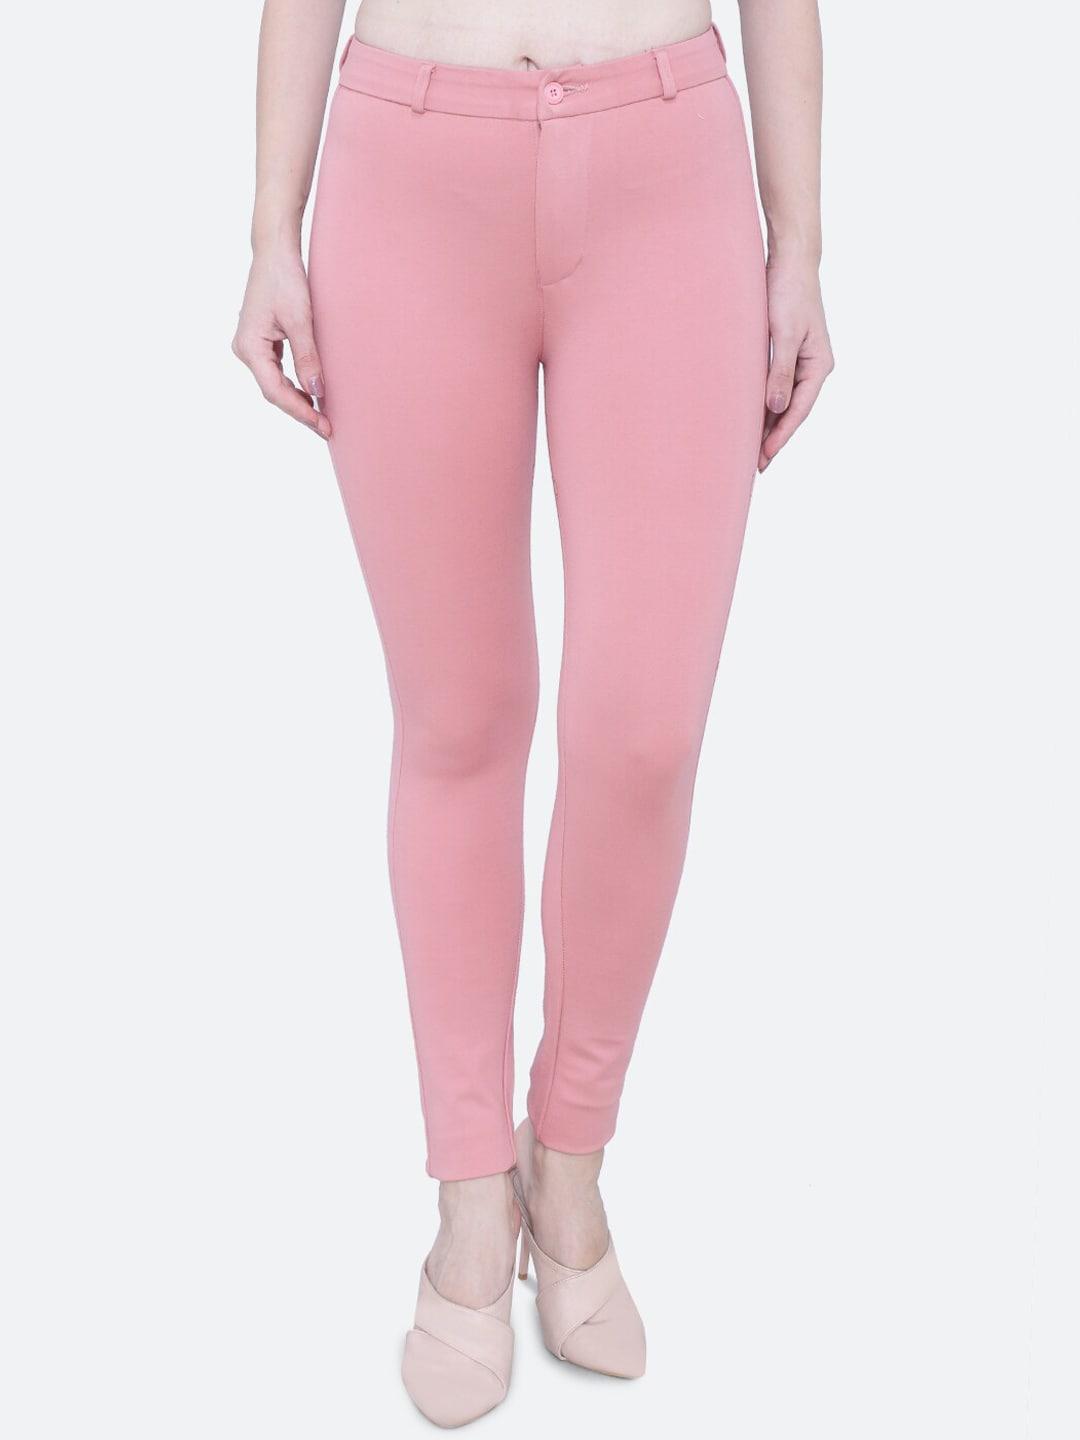 fck-3-women-cotton-smart-slim-fit-high-rise-wrinkle-free-trousers